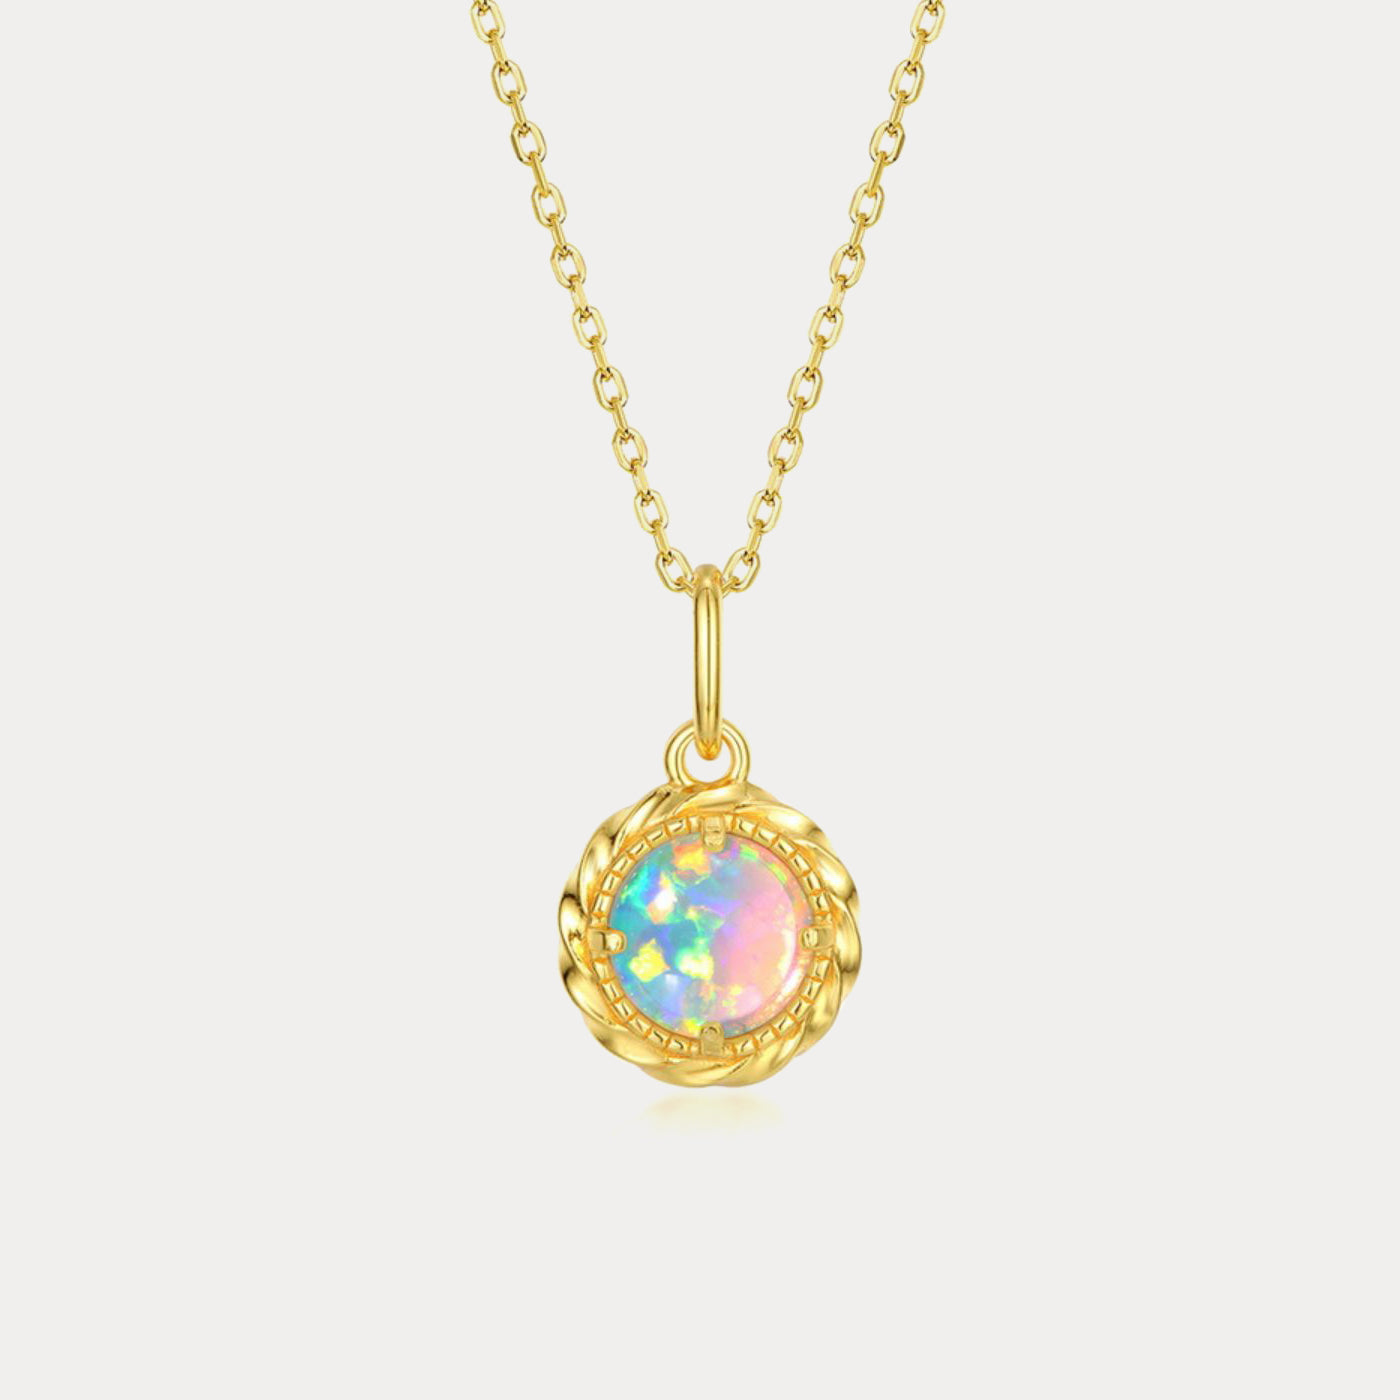 Selenichast opal necklace